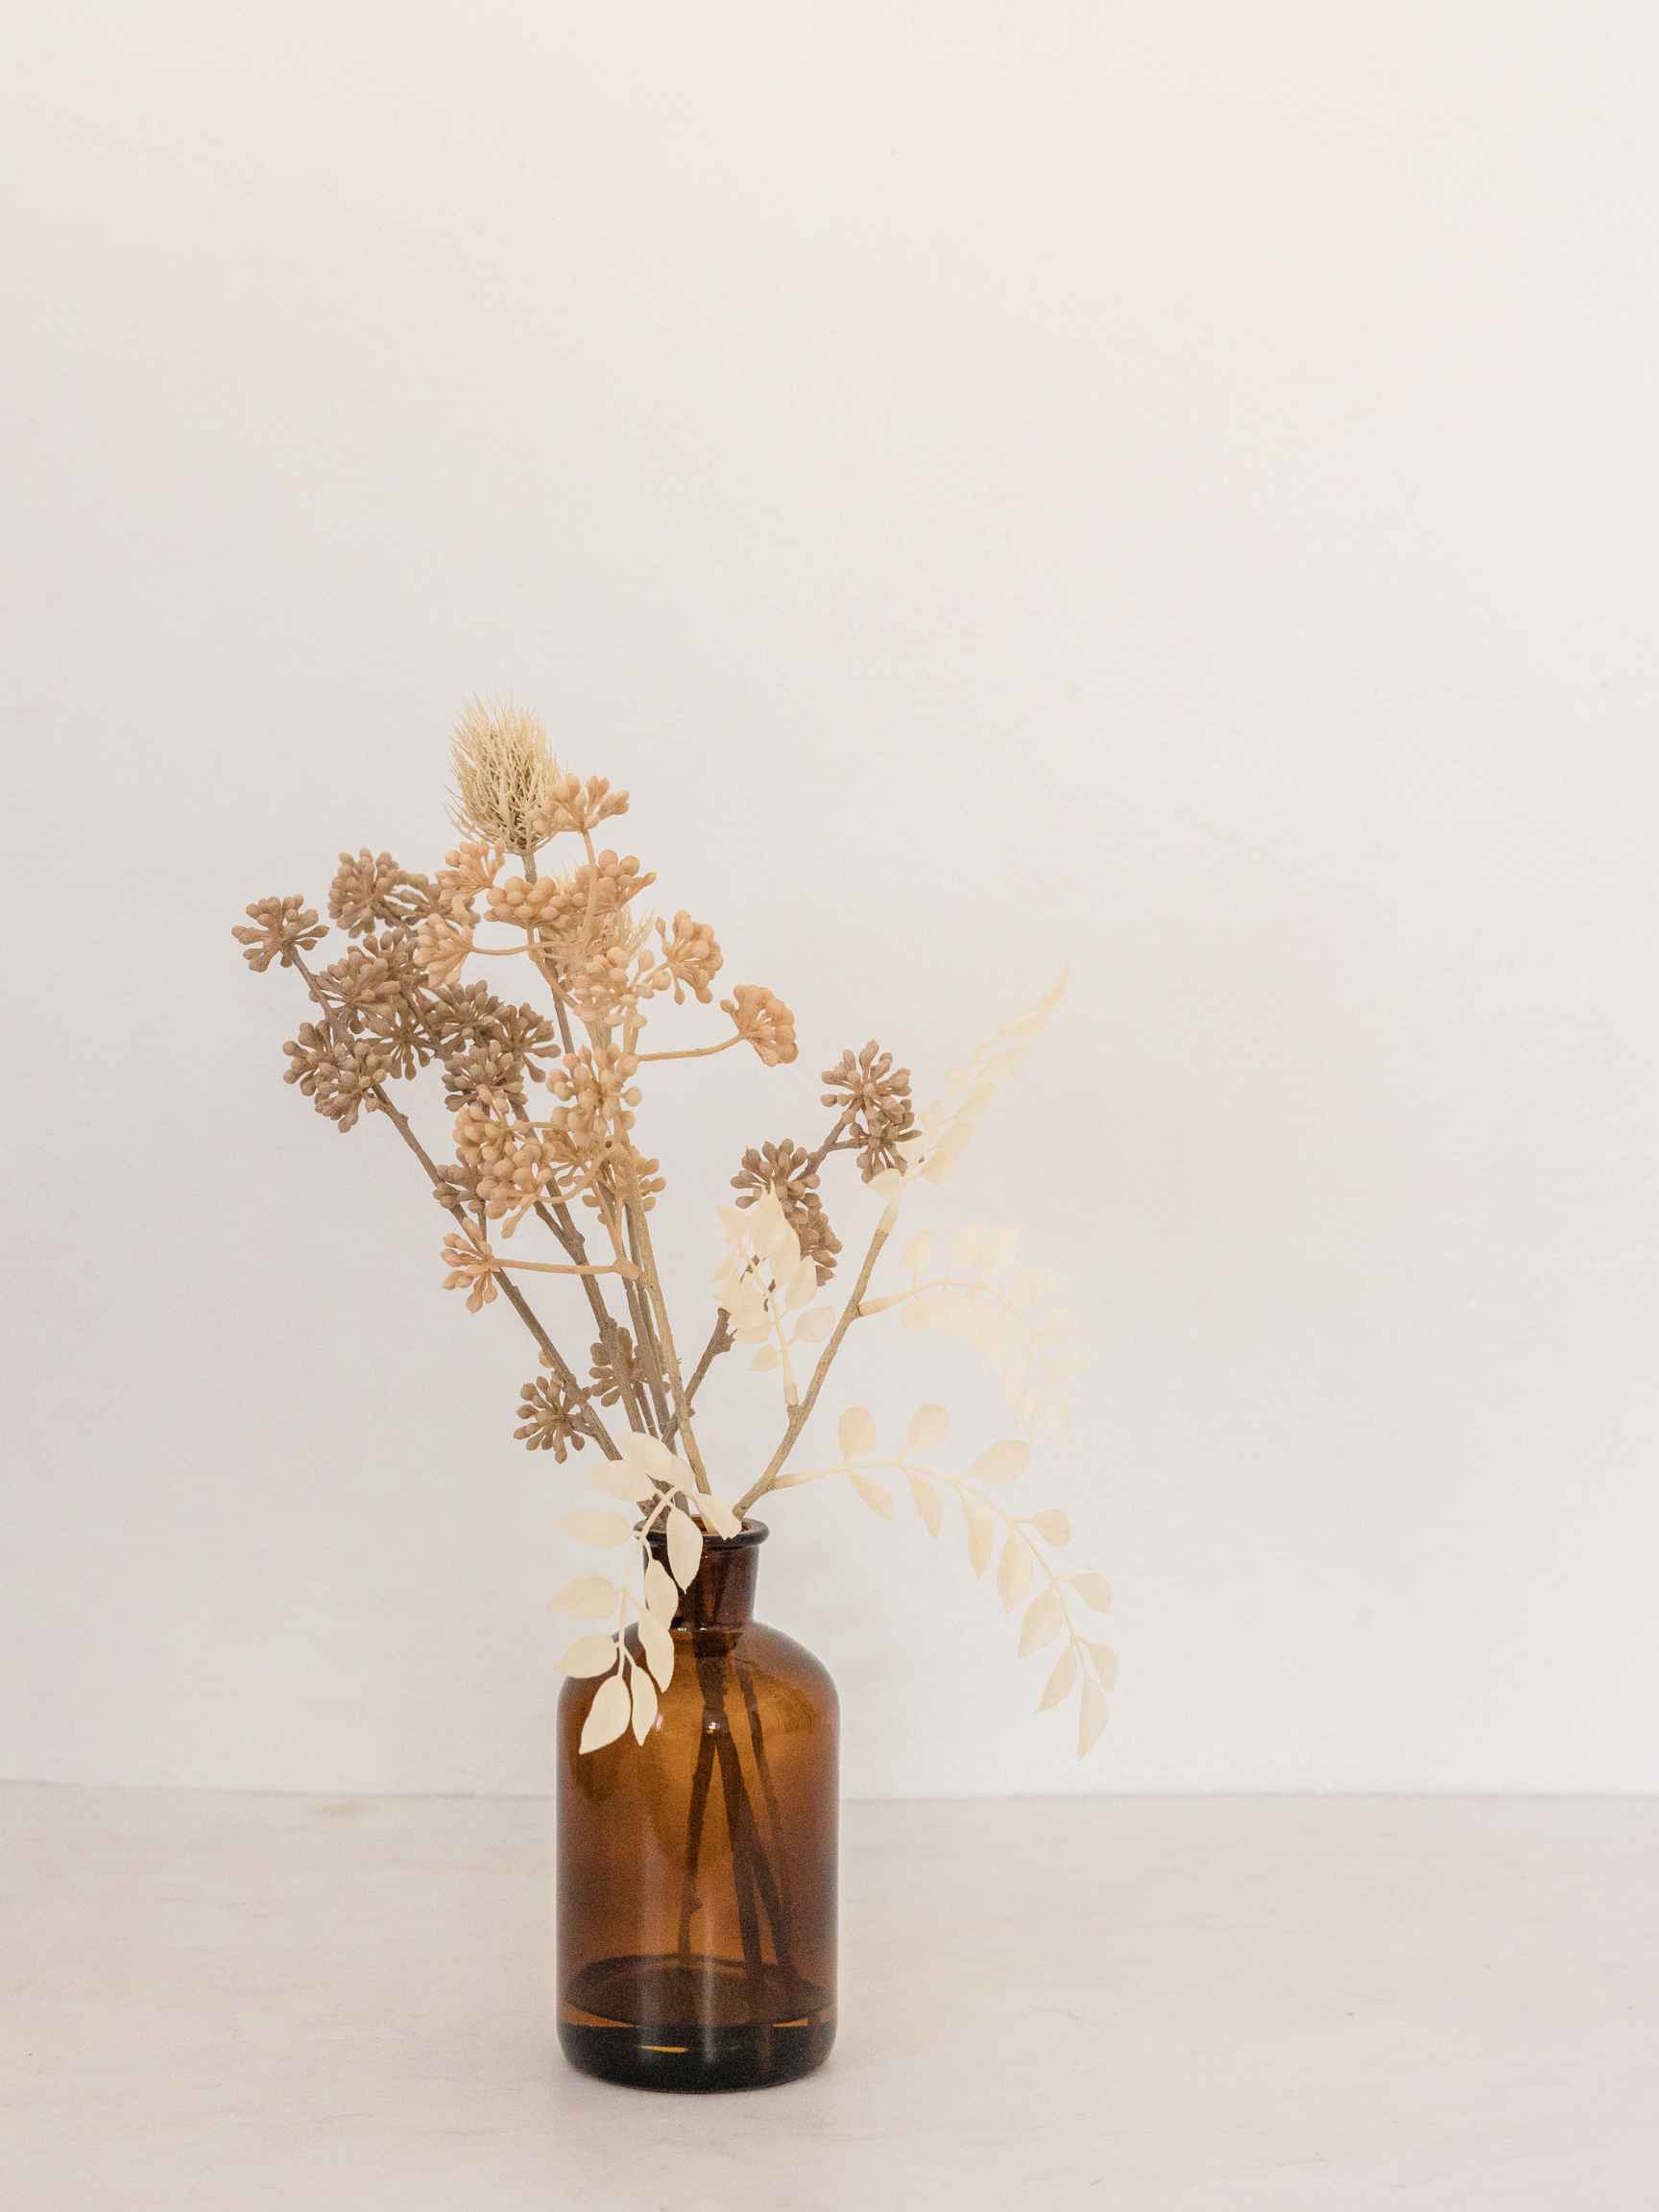 Dried flowers in a clear vase as wedding flower alternatives